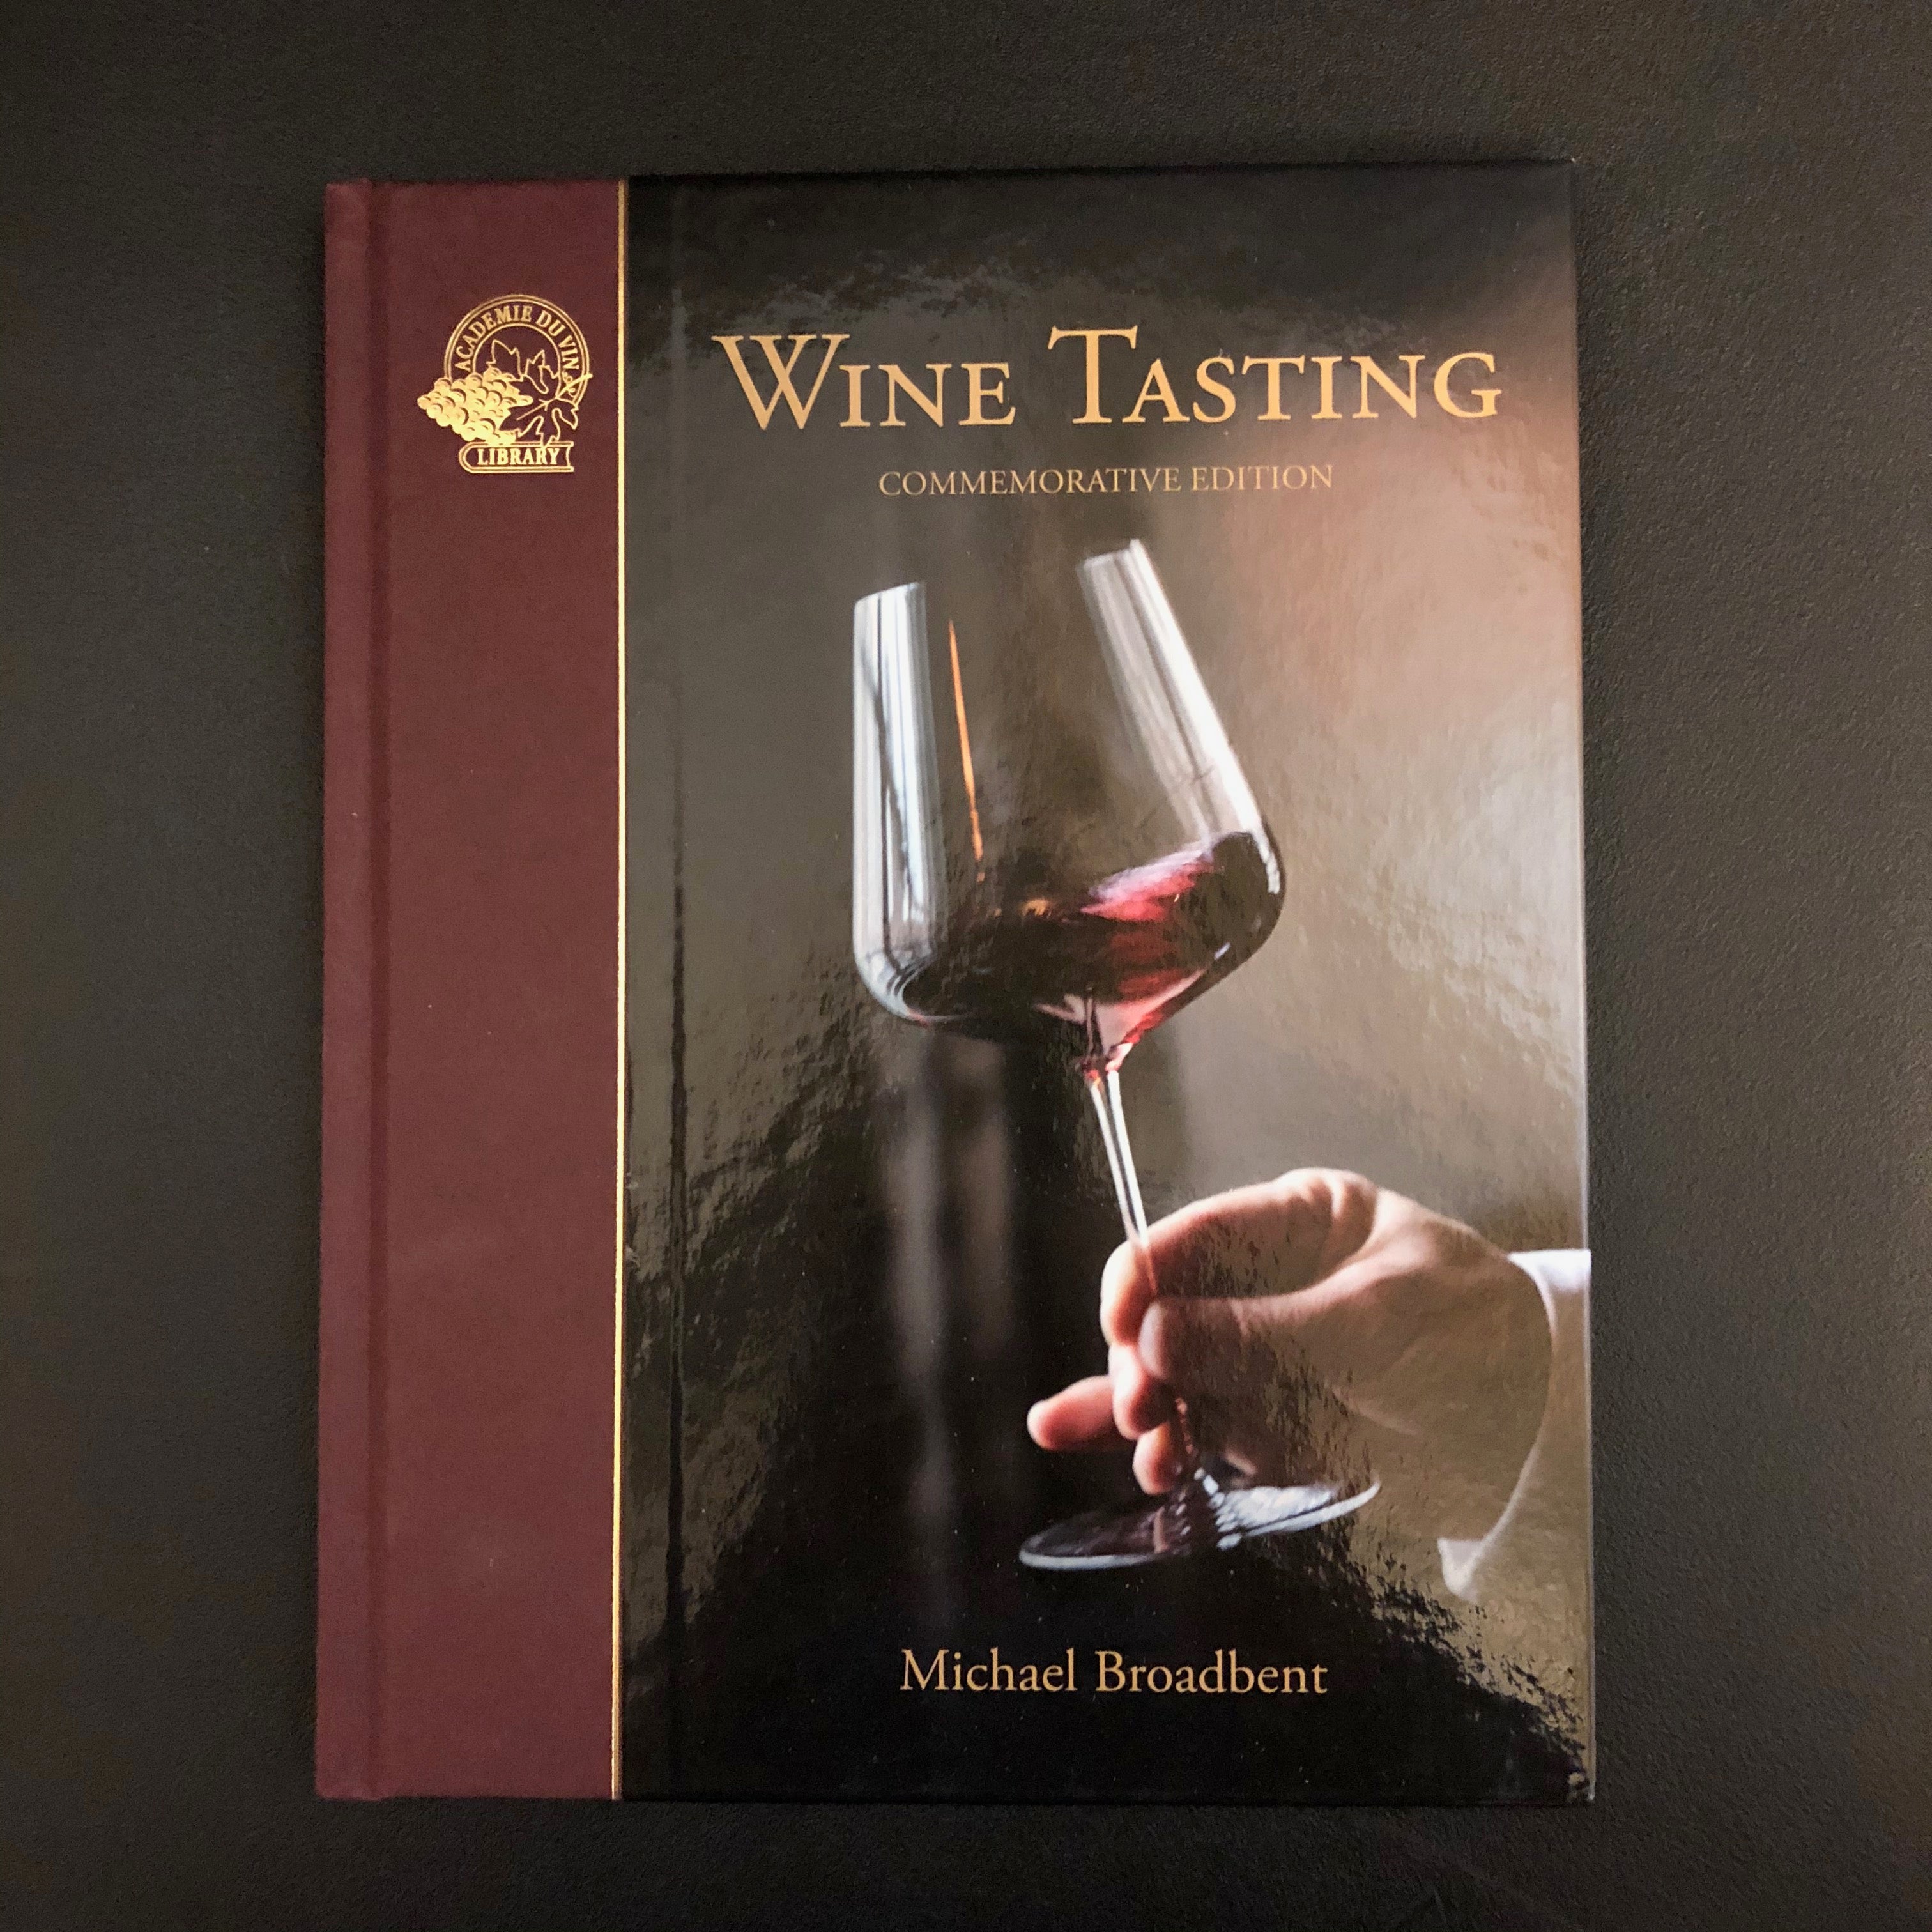 Michael Broadbent's Wine Tasting Commemorative Edition